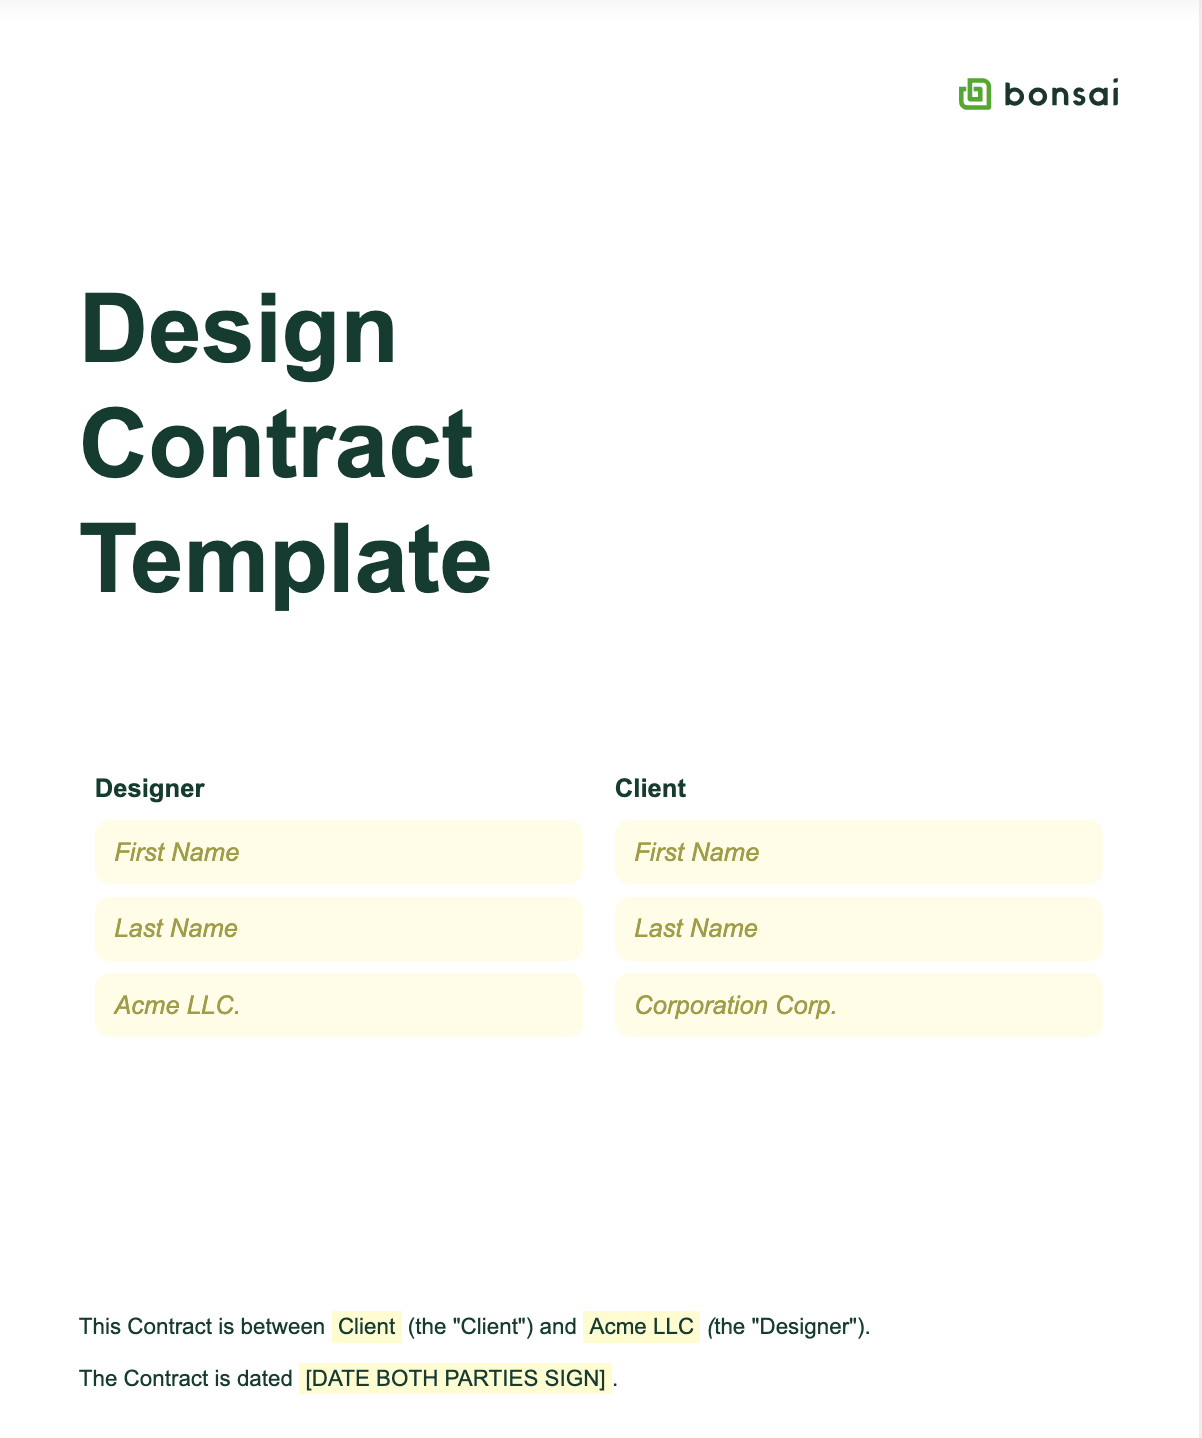 bonsai freelance graphic design contract